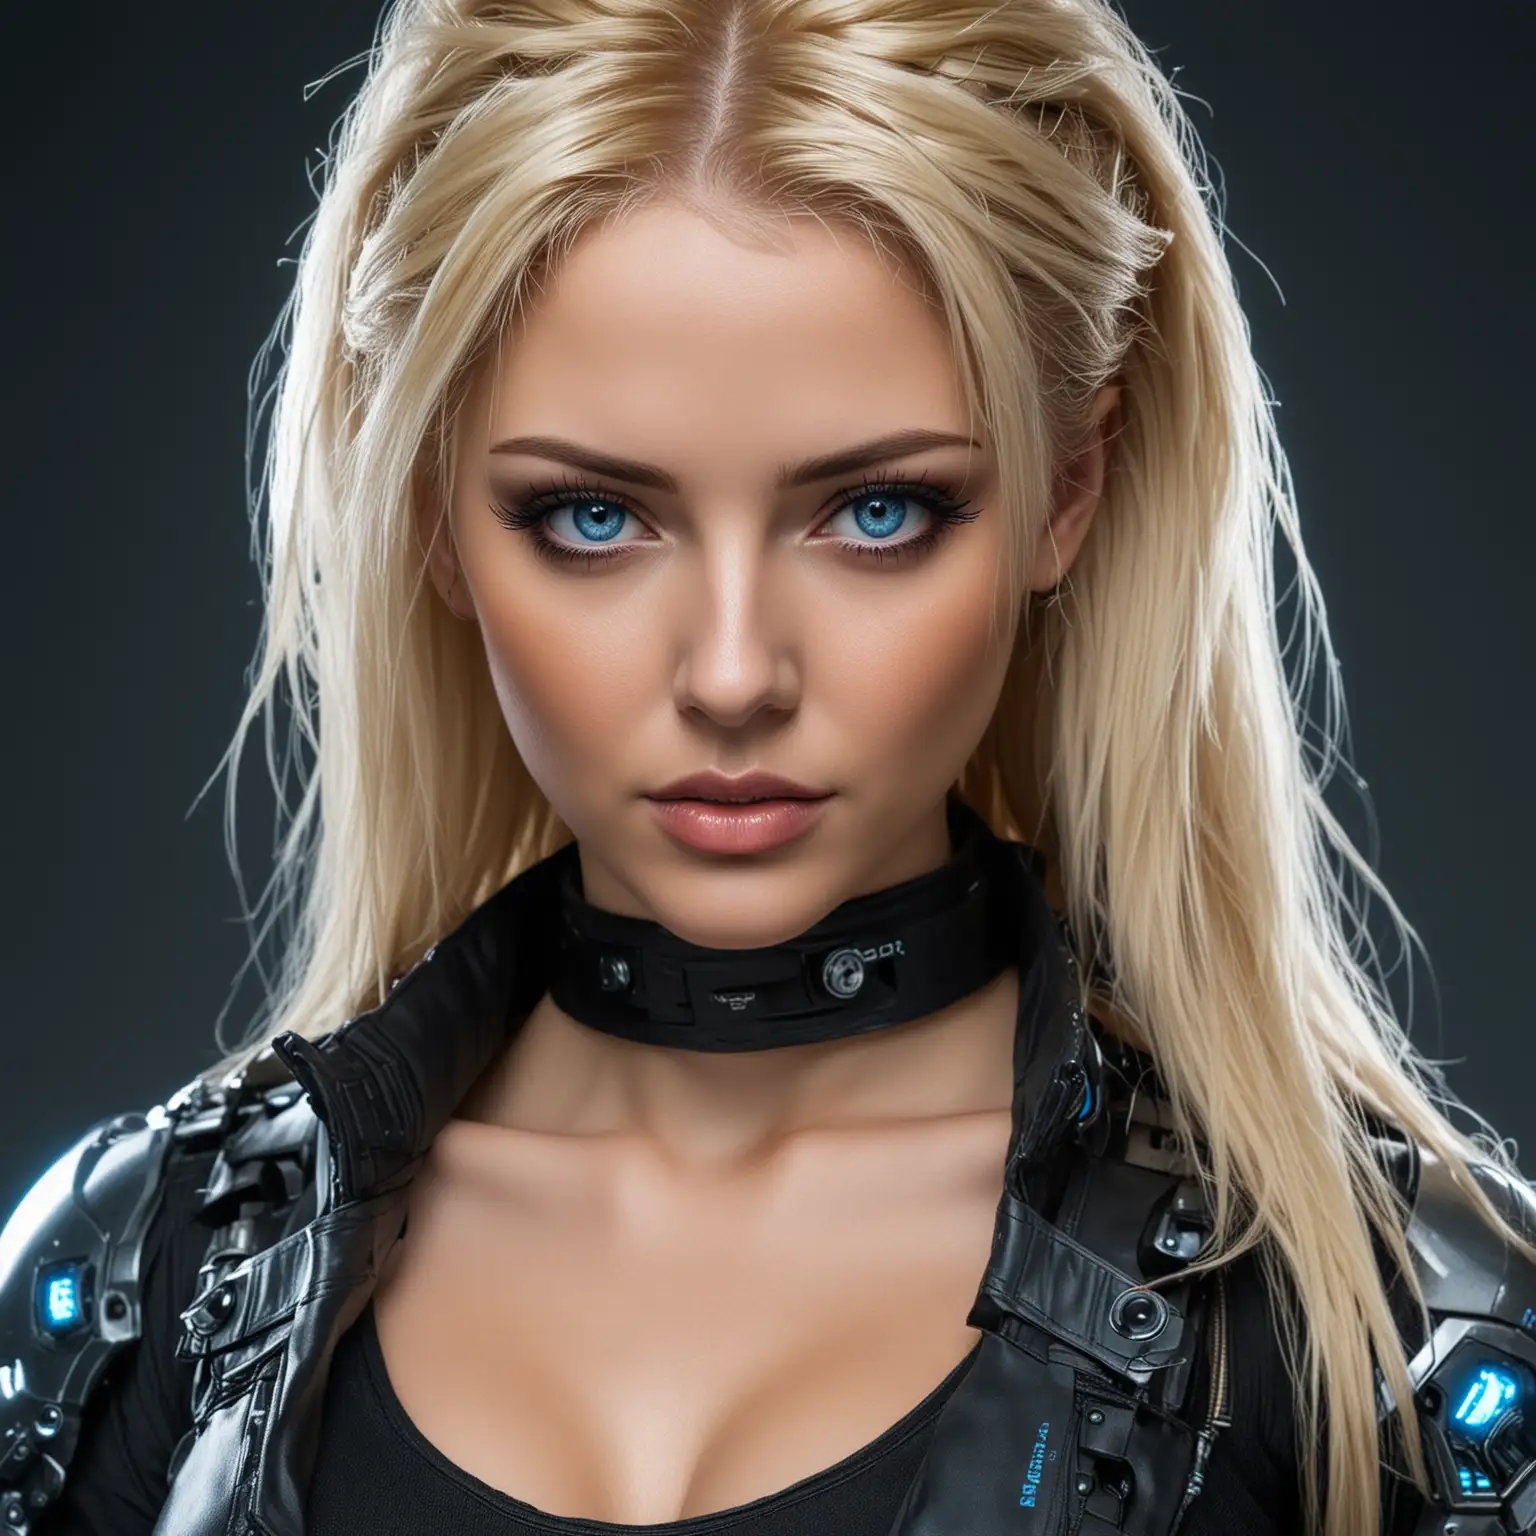 hot looking cyberpunk lady 30 years old,blonde hair blue eyes.